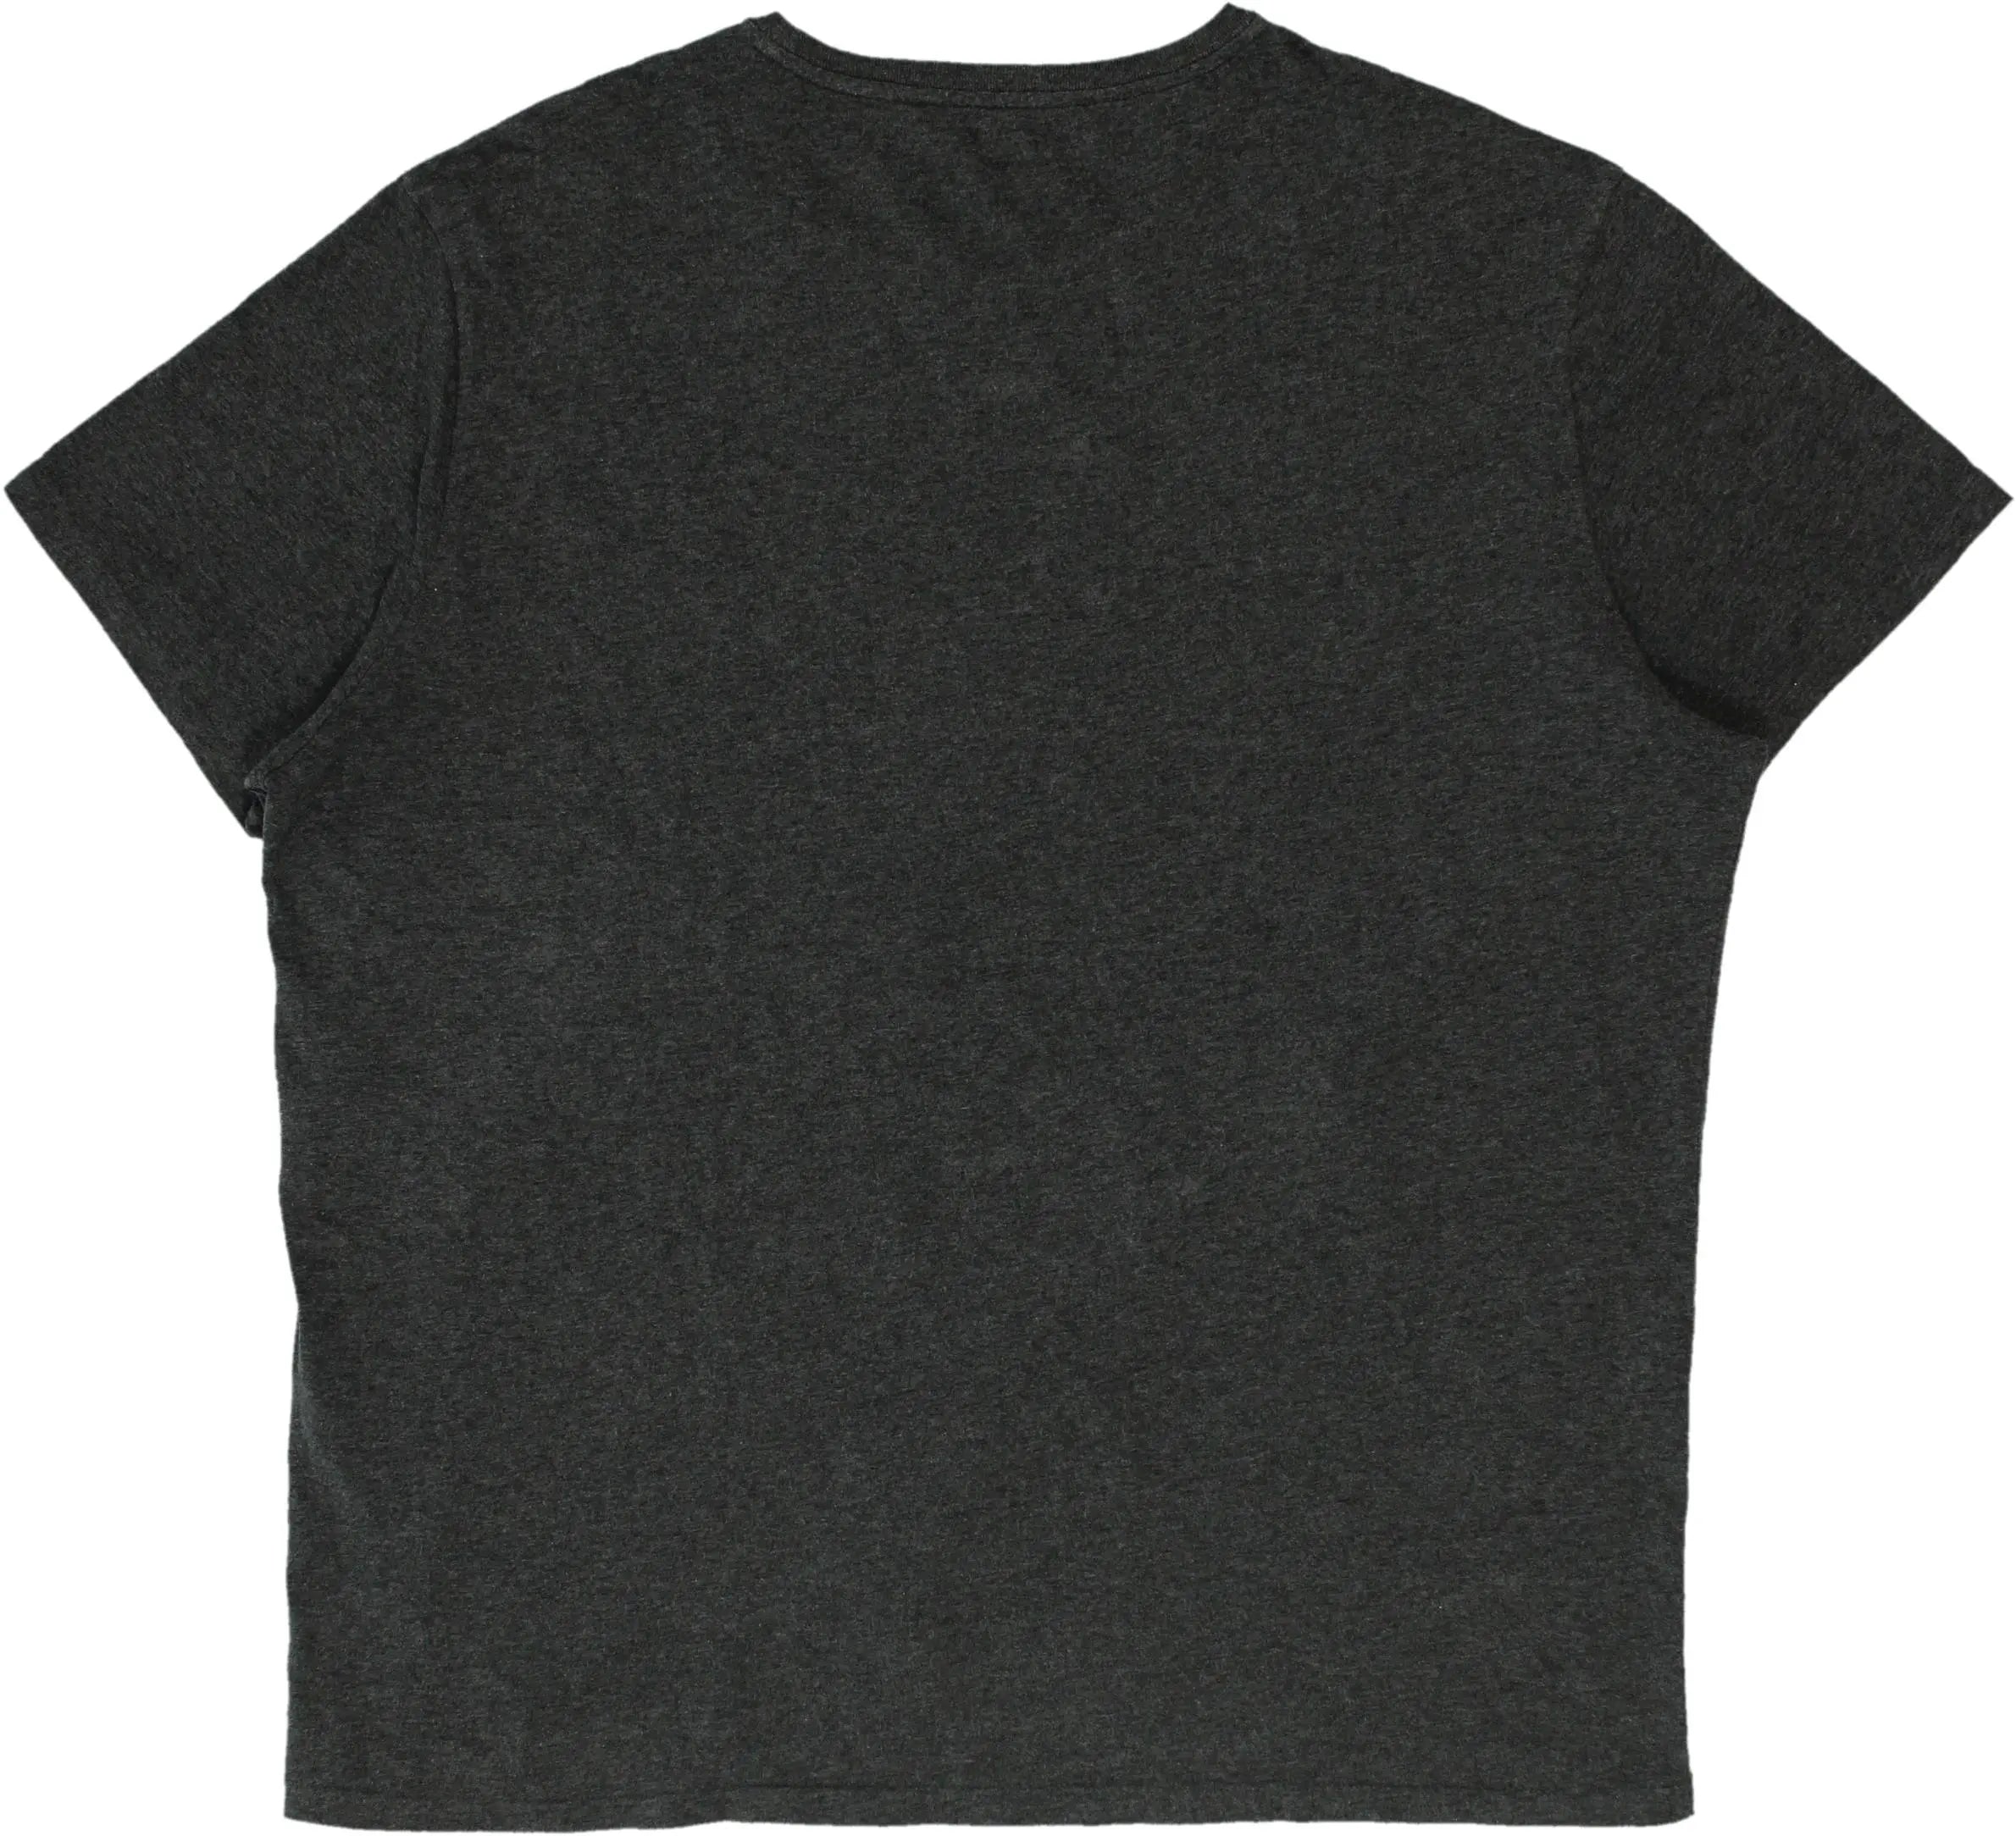 Ralph Lauren - T-Shirt by Ralph Lauren- ThriftTale.com - Vintage and second handclothing